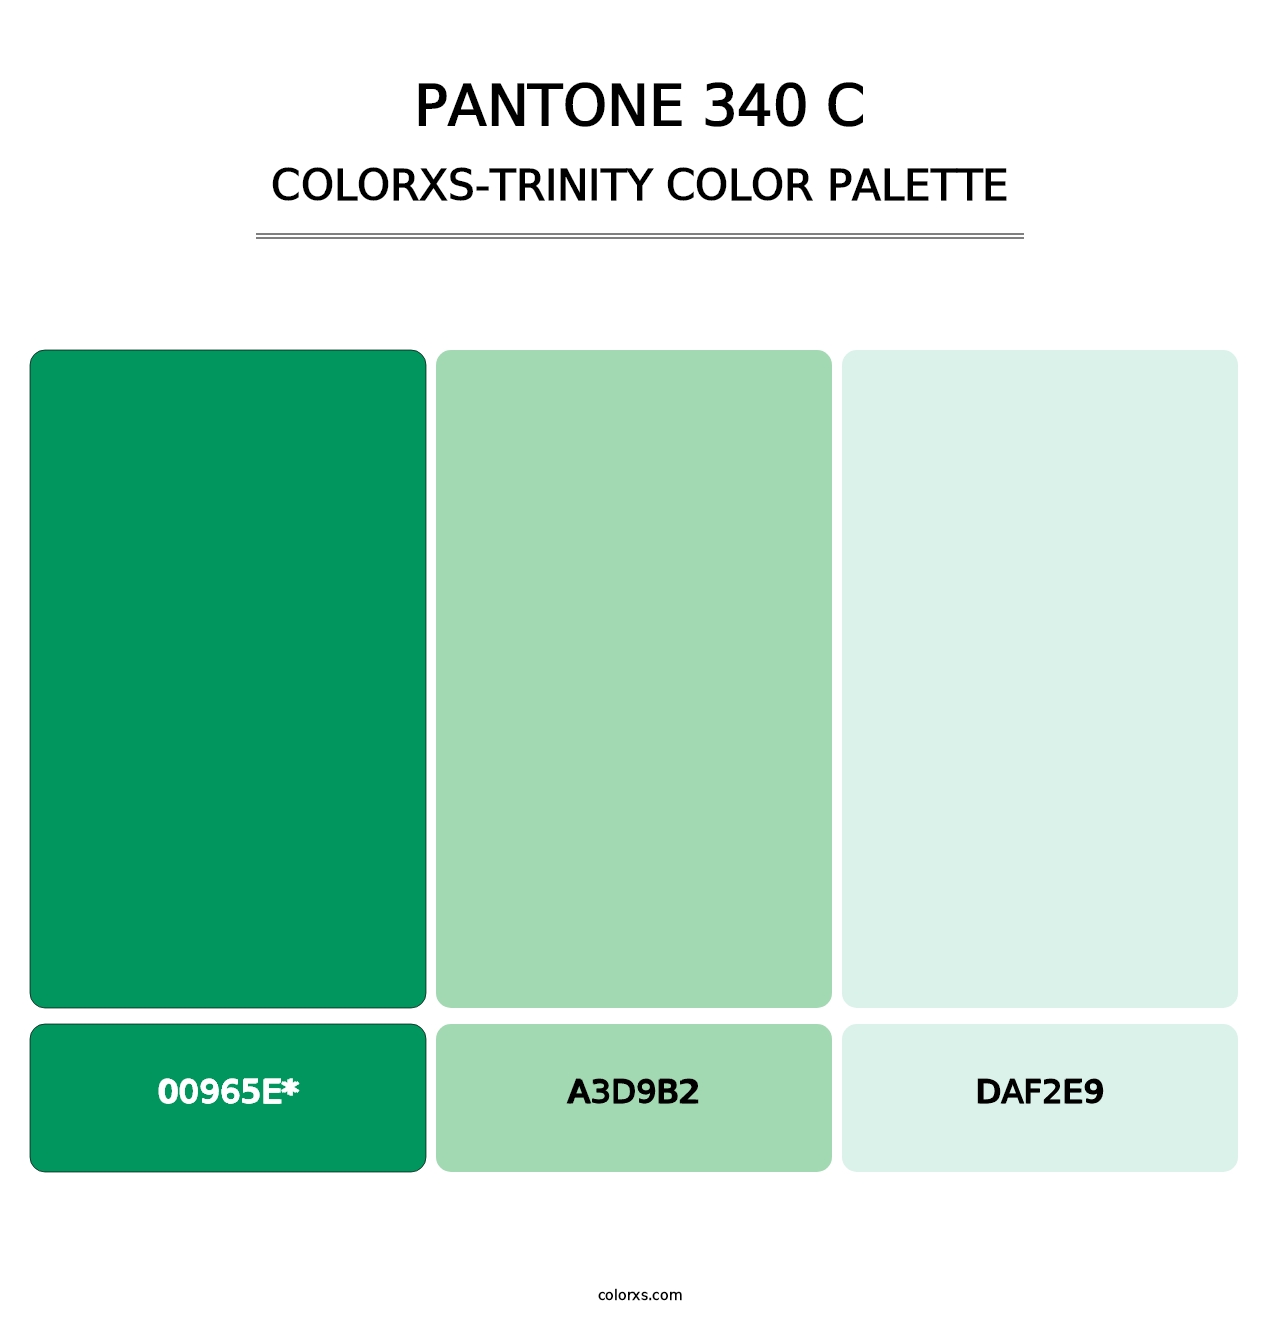 PANTONE 340 C - Colorxs Trinity Palette